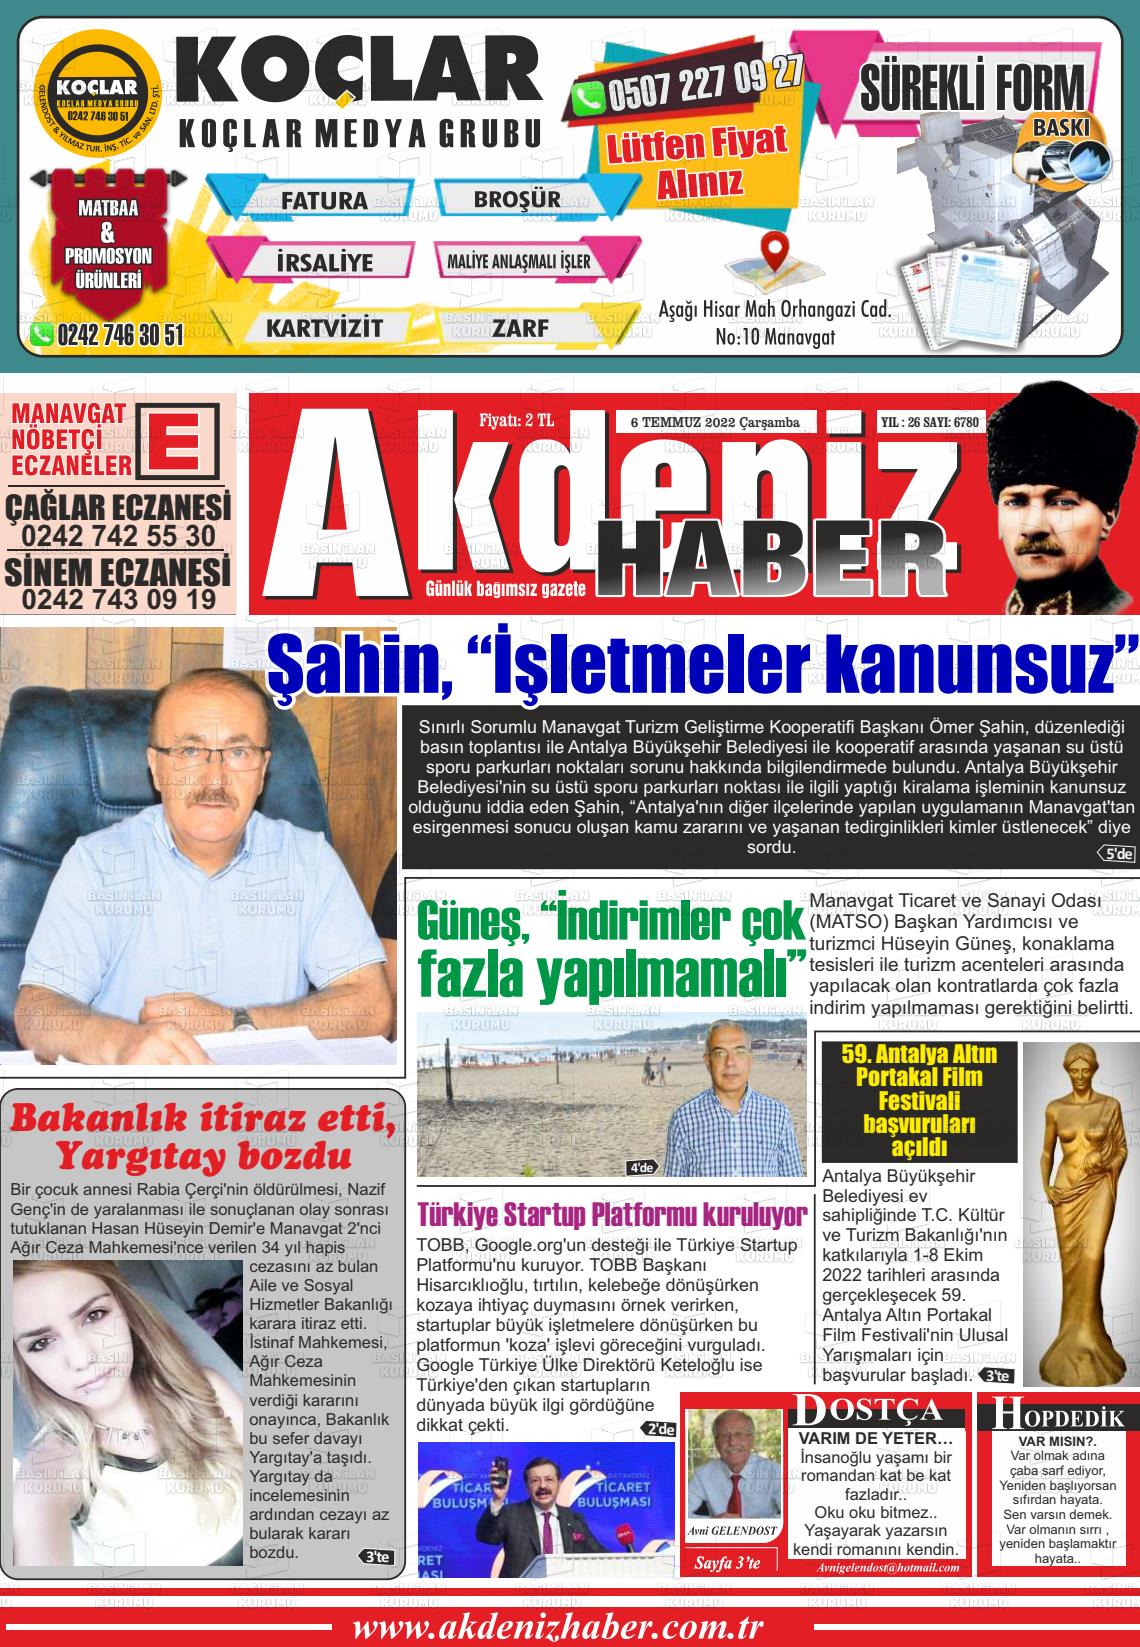 06 Temmuz 2022 Akdeniz Haber Gazete Manşeti